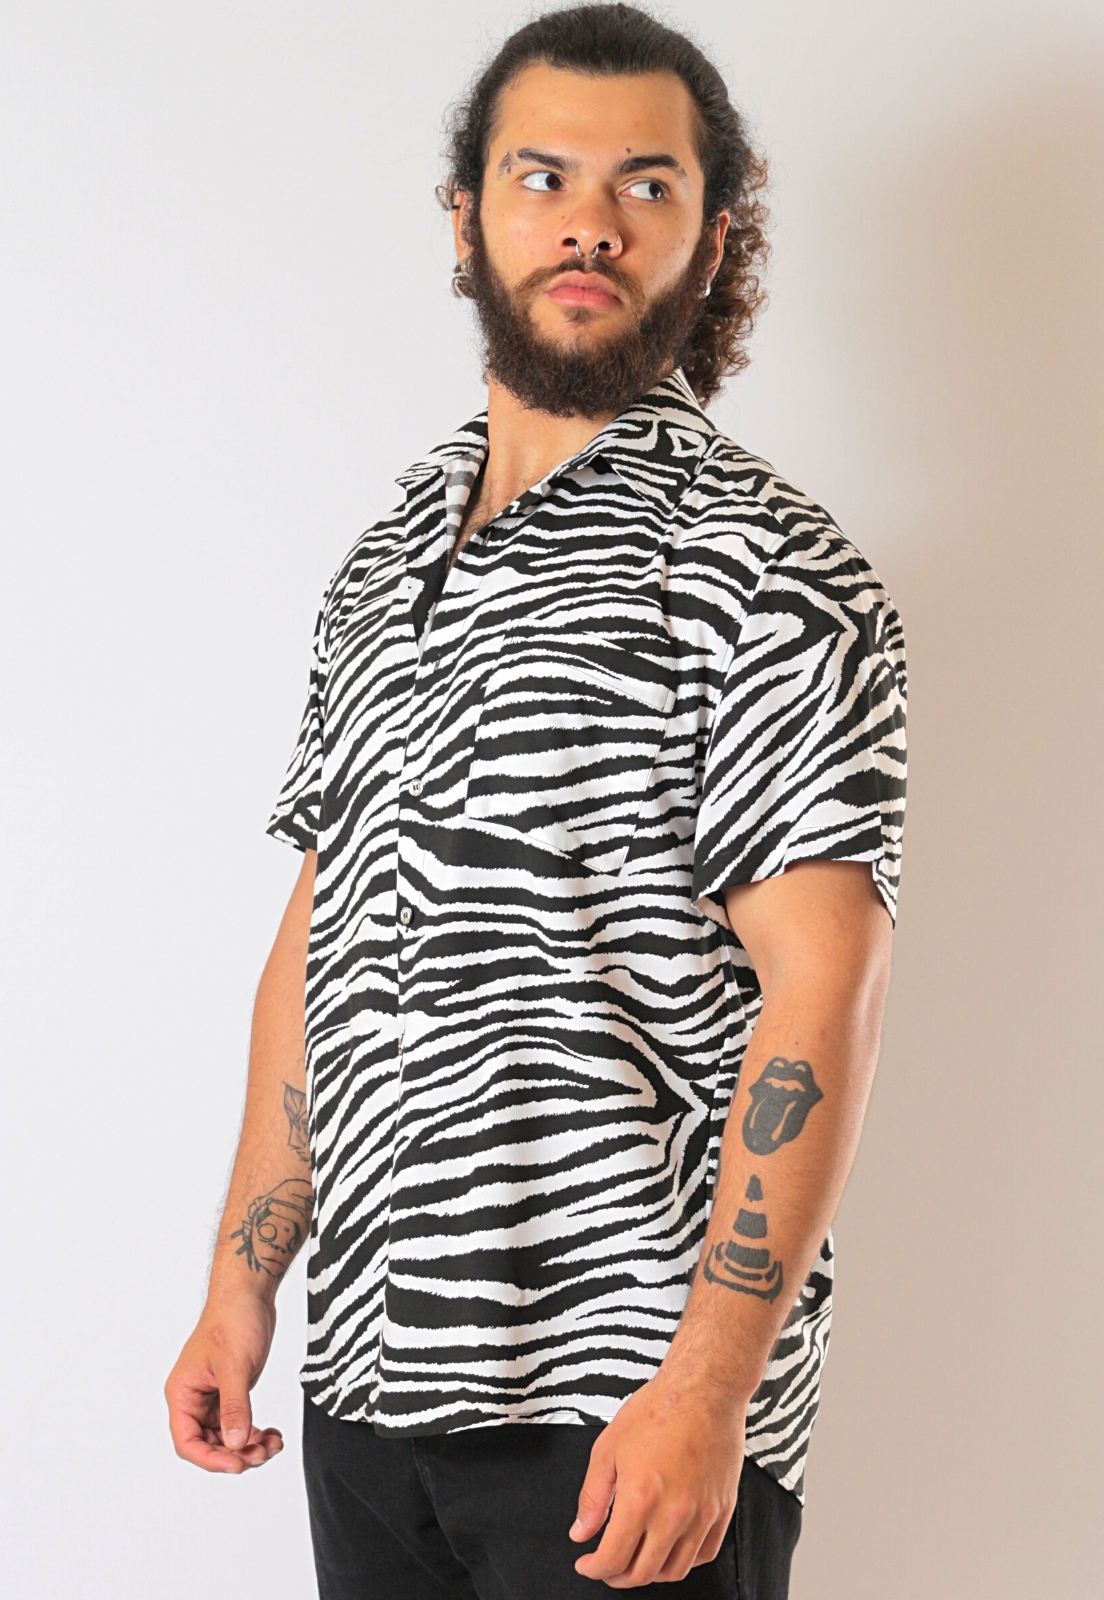 Camisa Animal Print Zebra Estampada ElephunK Zebras Animal Preta